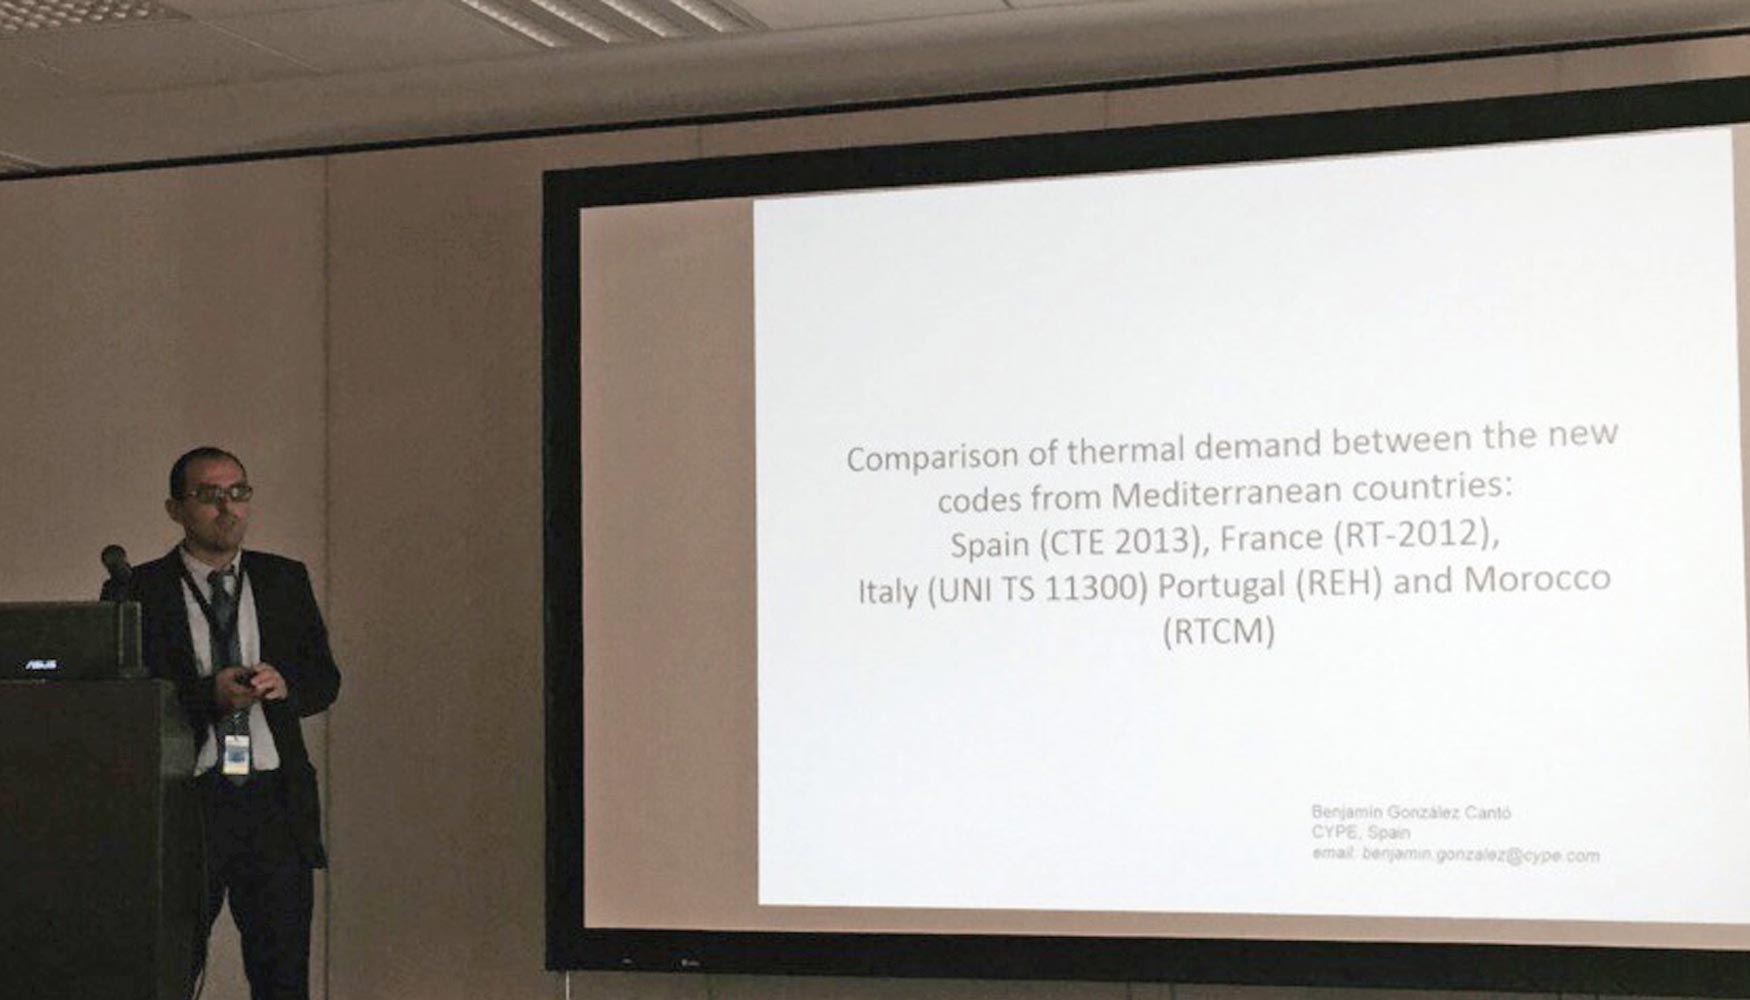 Benjamn Gonzlez al inicio de su presentacin titulada Comparison of Thermal Demand between the New Codes from Mediterranean Countries...